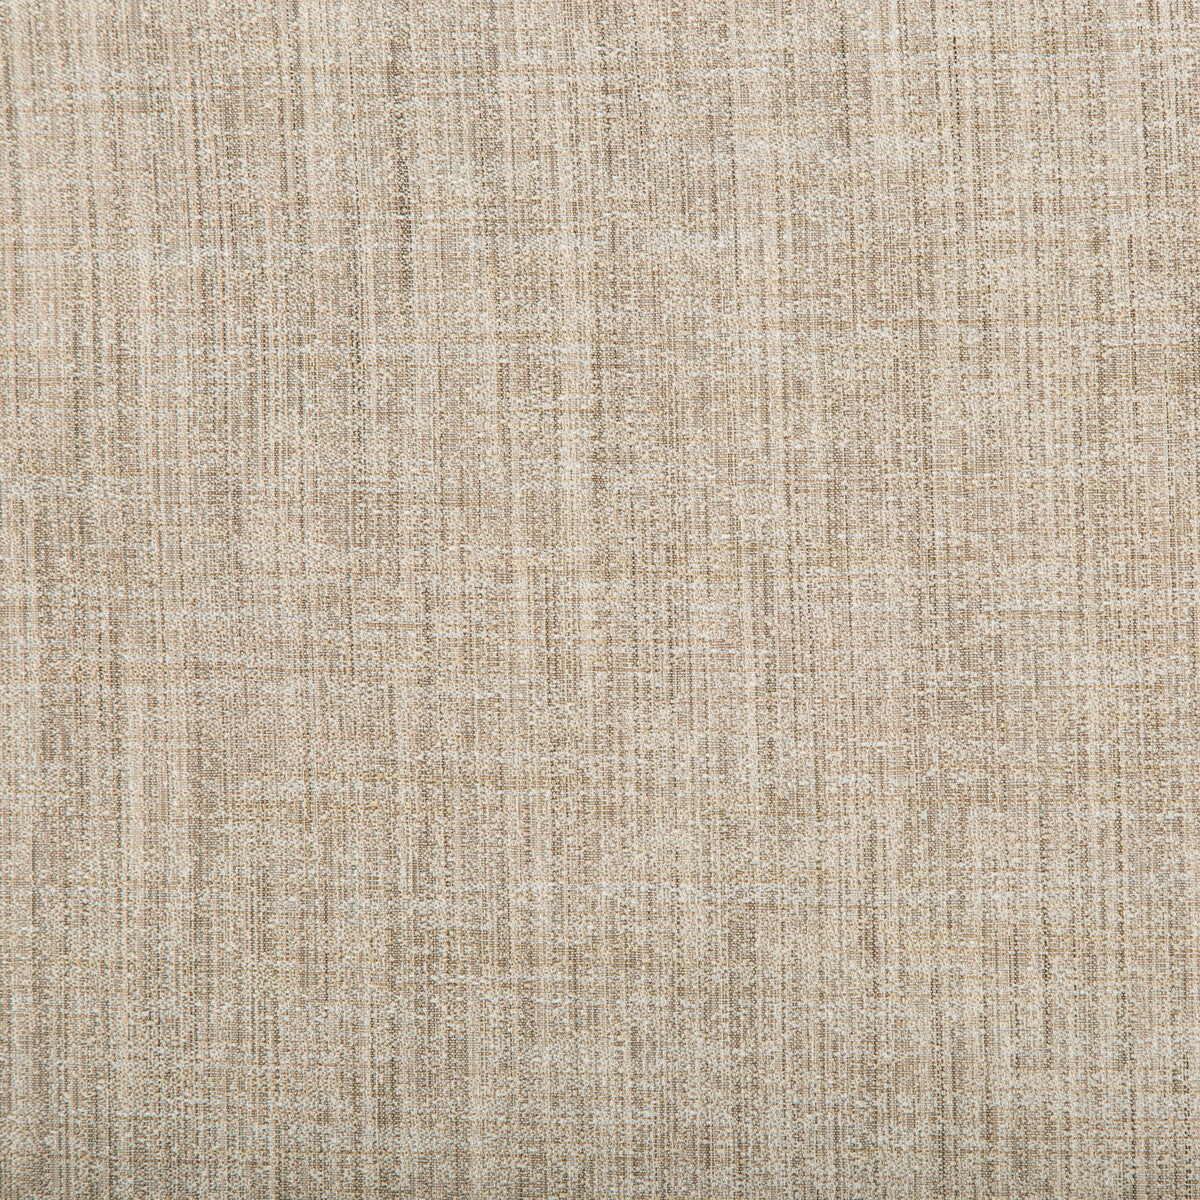 Kravet Basics fabric in 4650-11 color - pattern 4650.11.0 - by Kravet Contract